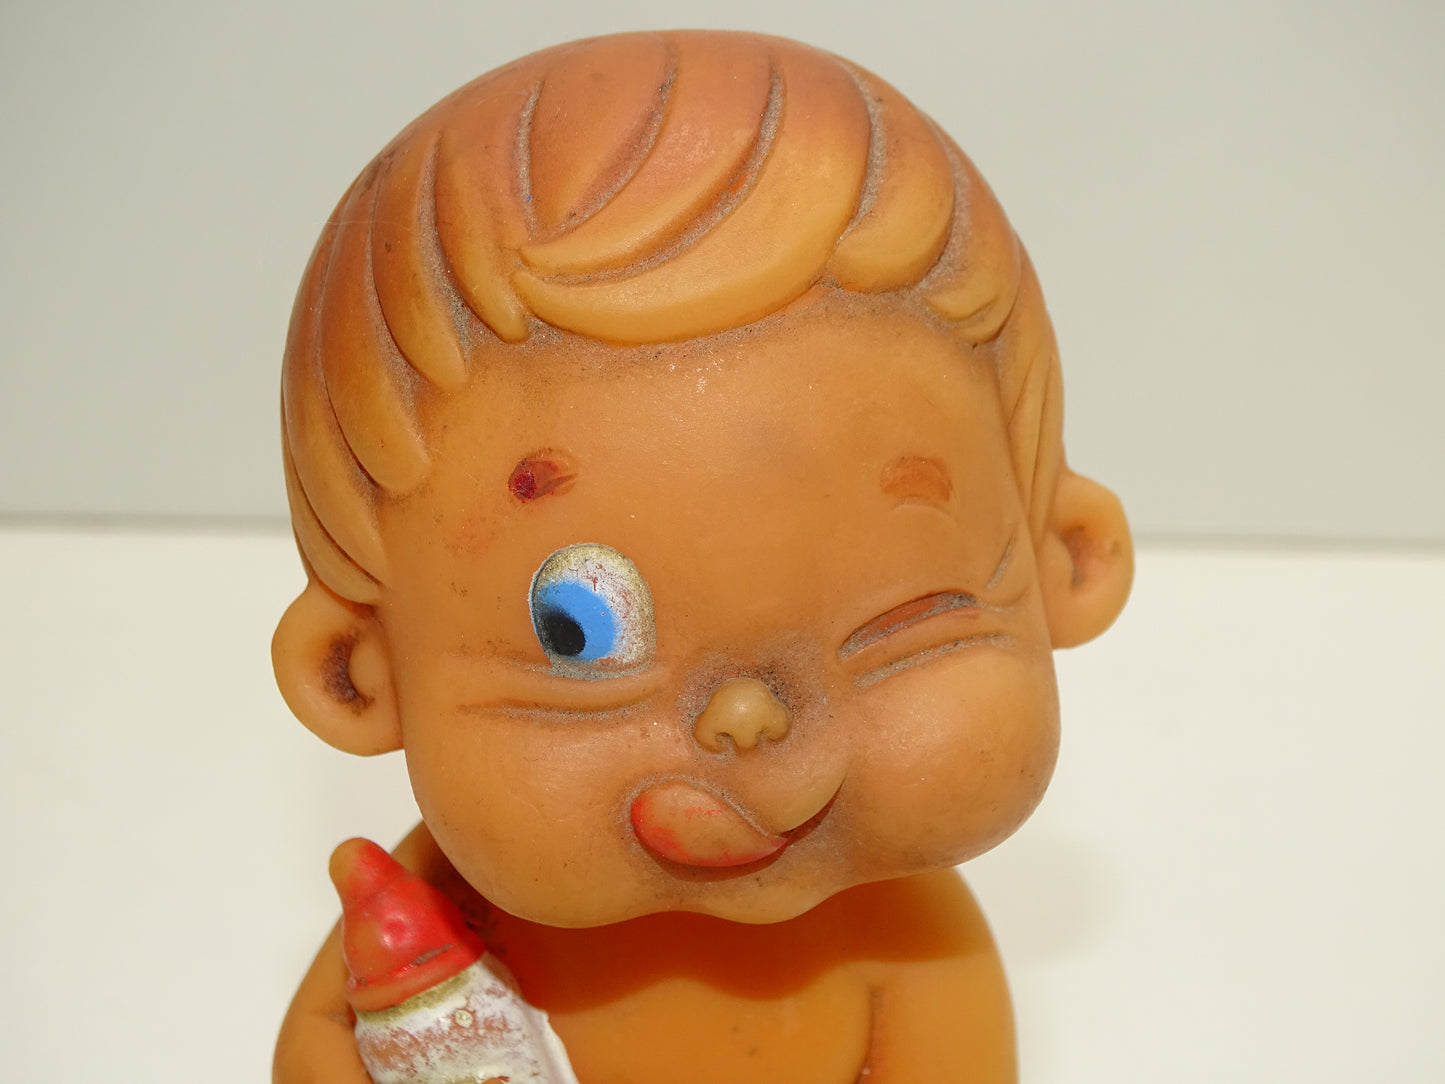 Rubberen Piepspeelgoed: Baby, Laflex, Made In France, 1961